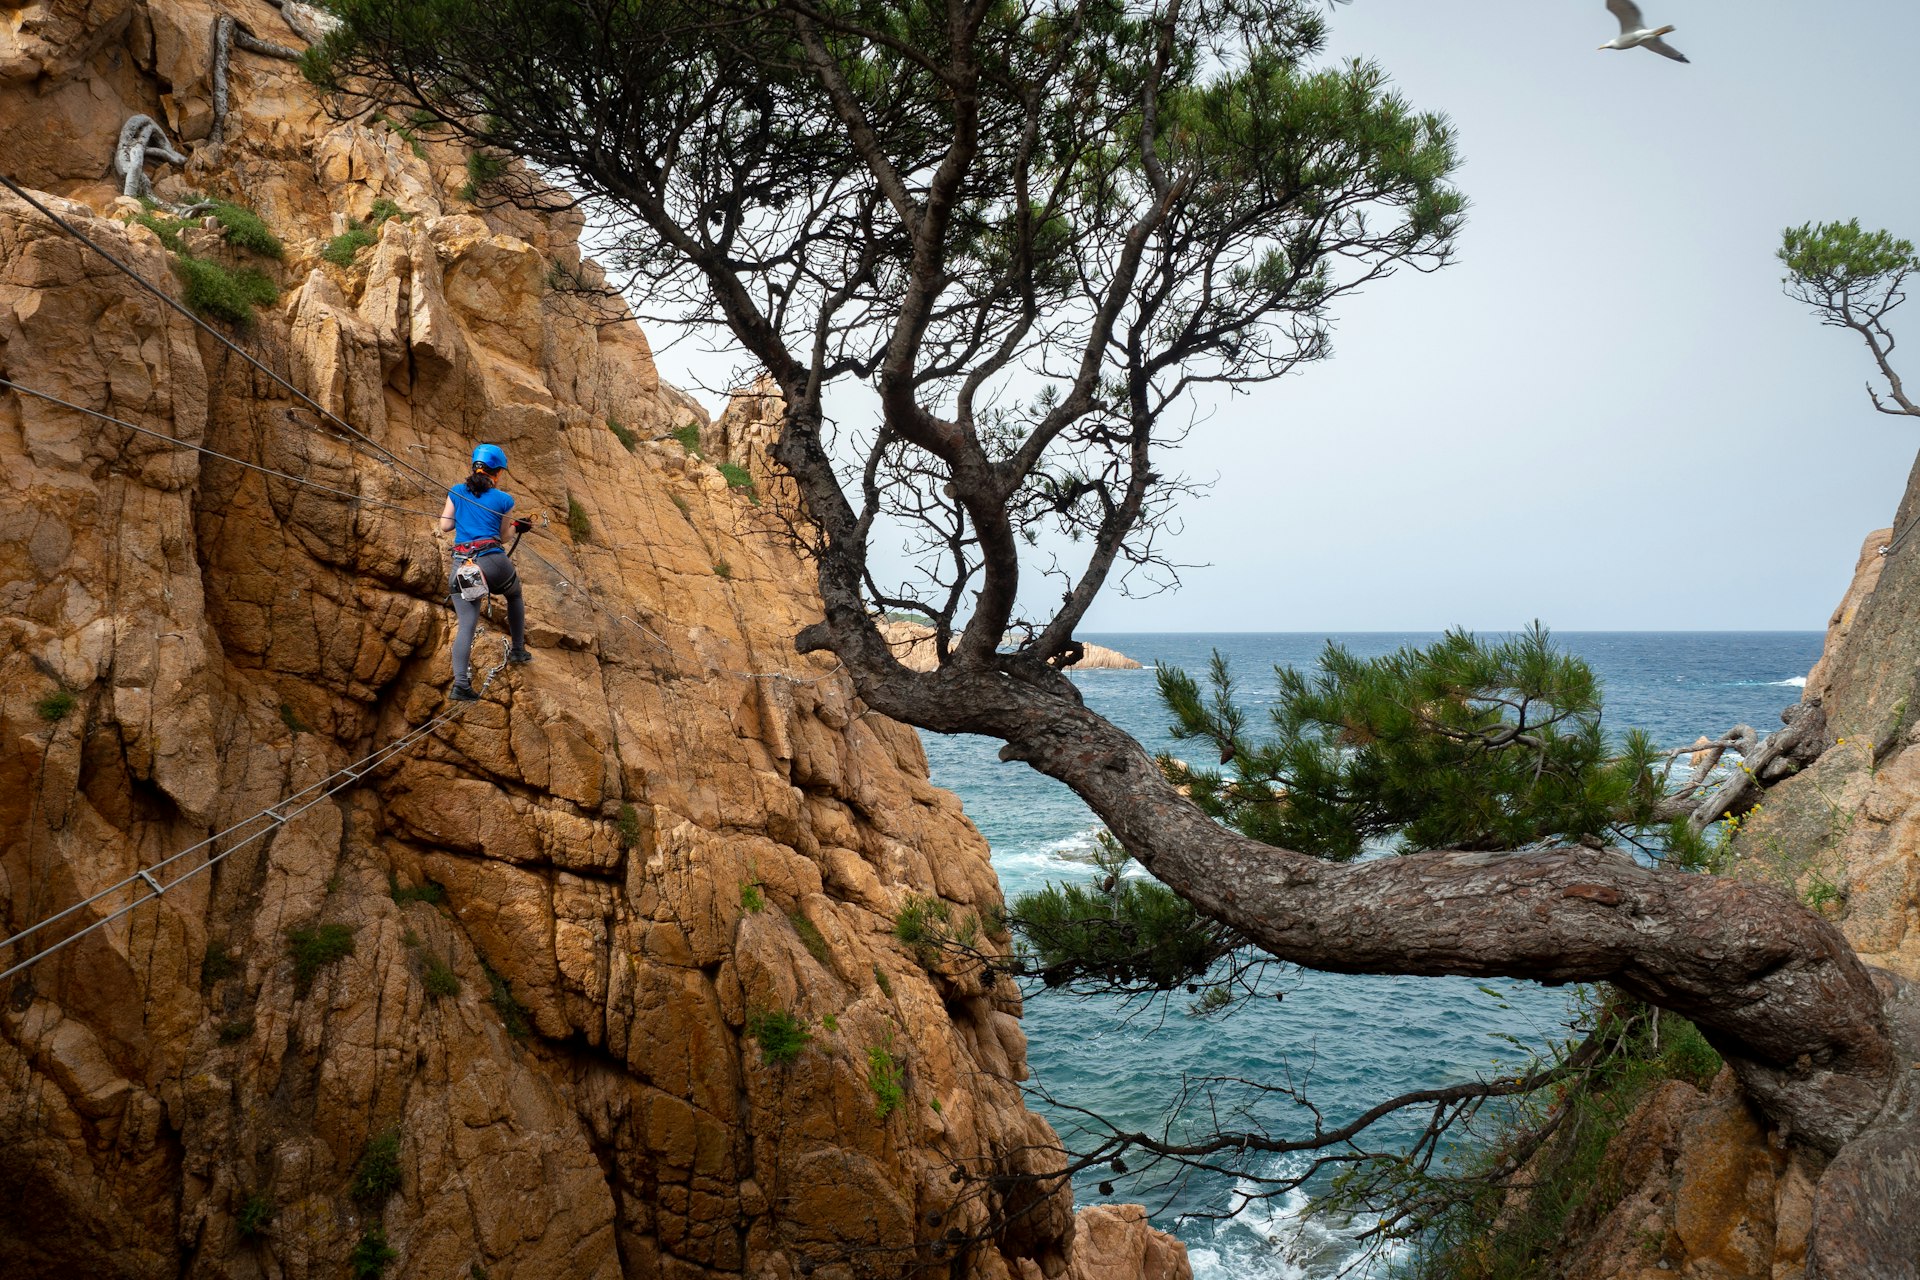 Woman climbing a via ferrata around a copper rock face overlooking the ocean in Costa Brava, Spain